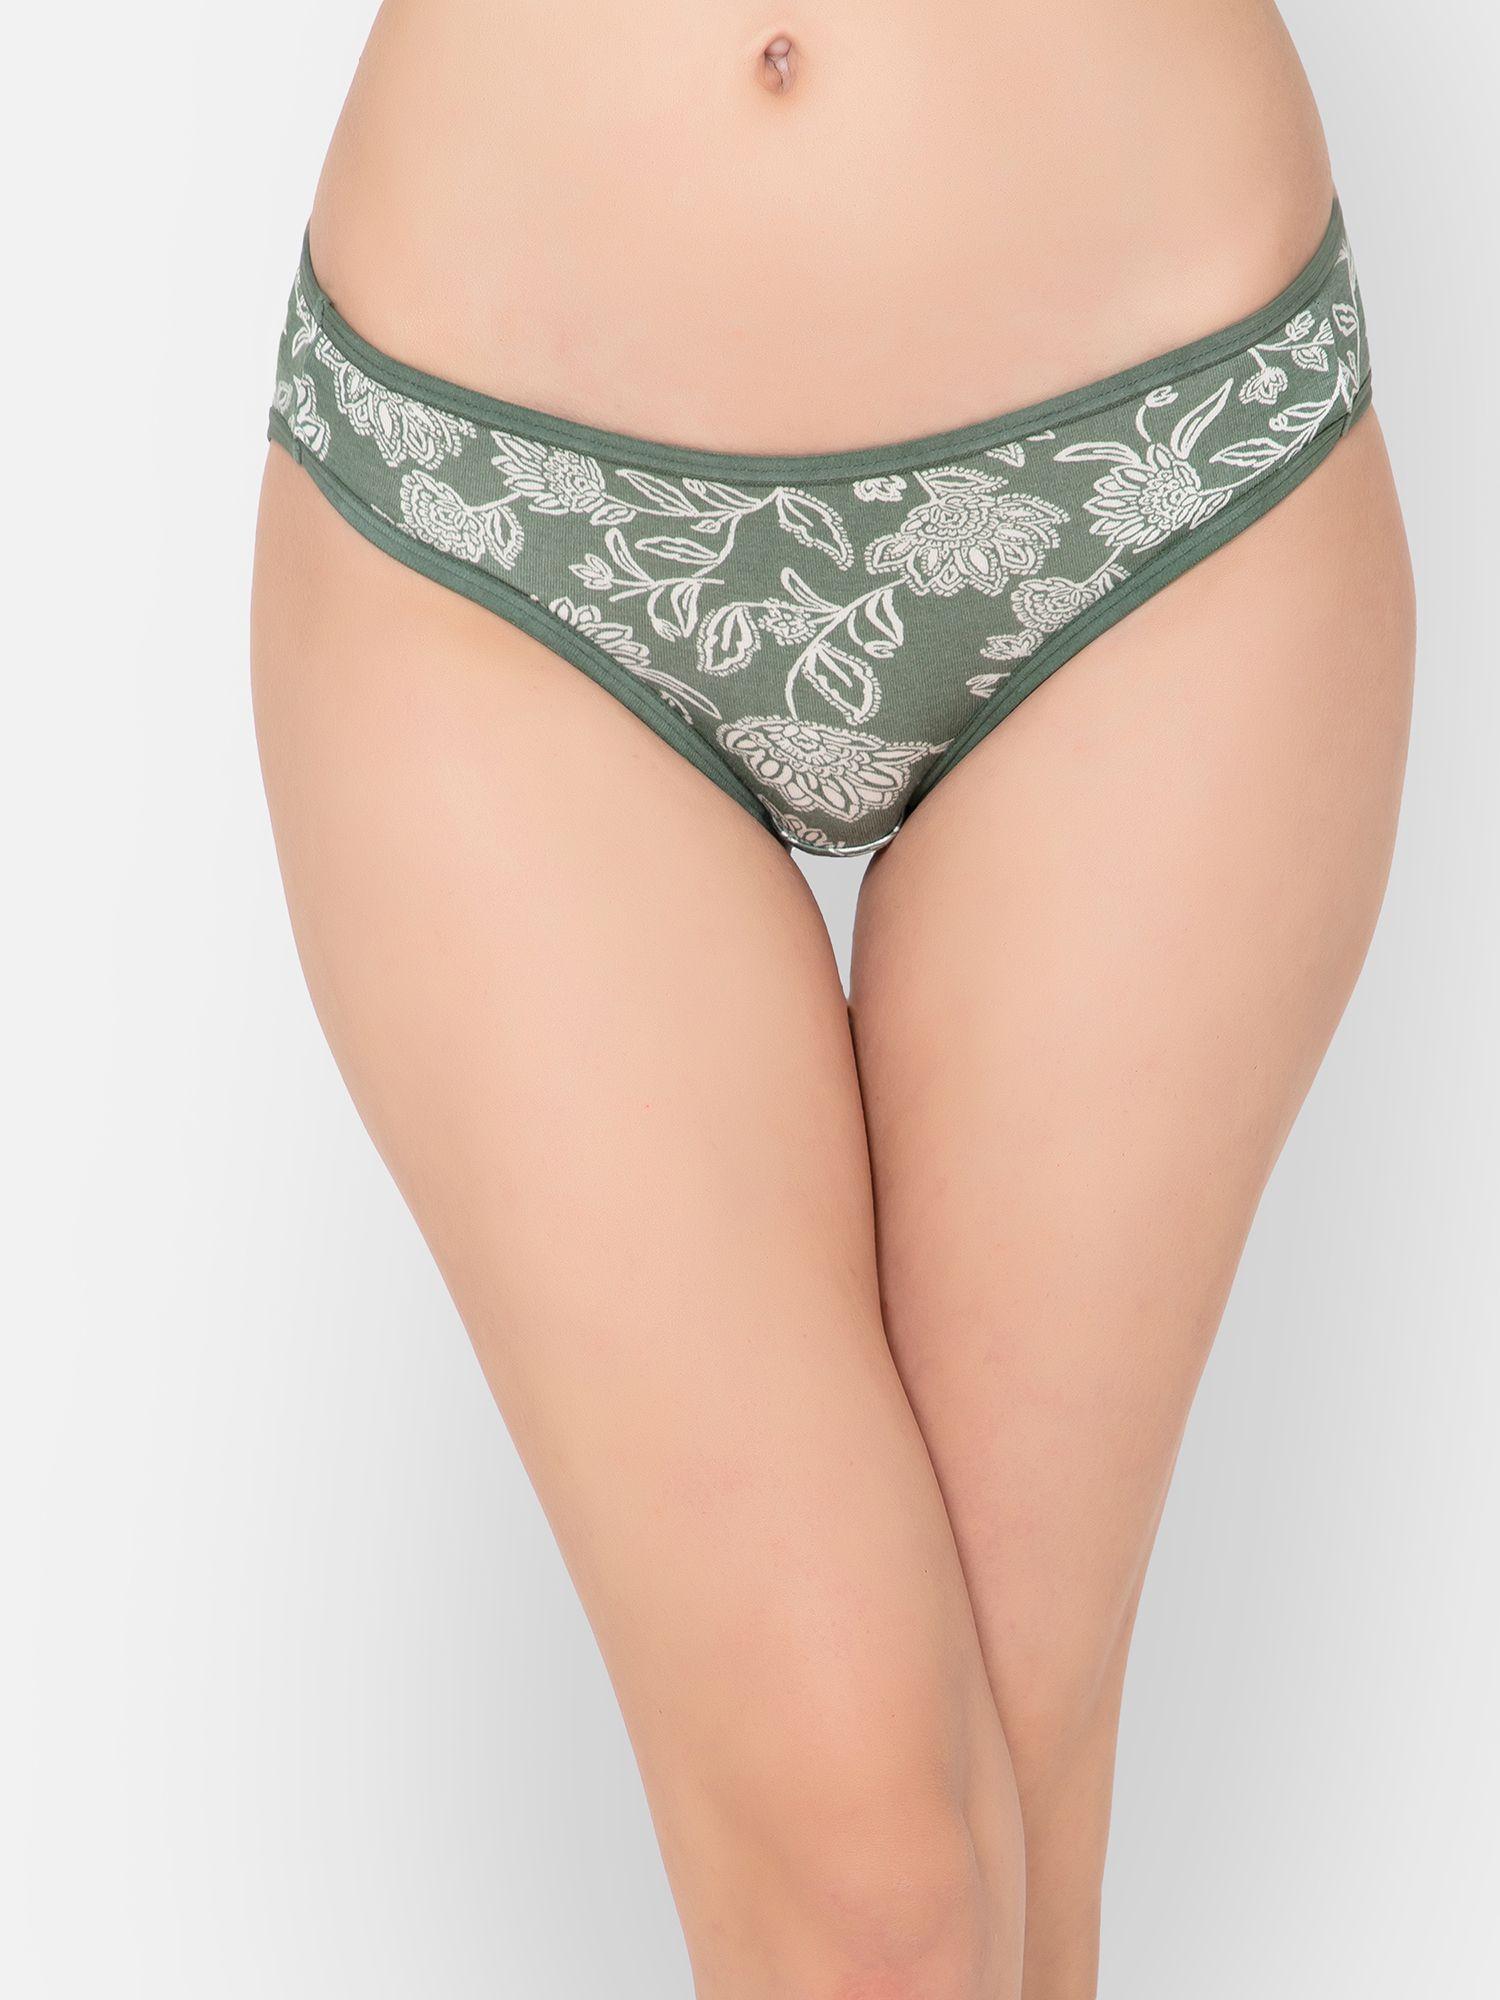 low waist floral print bikini panty in olive green - cotton